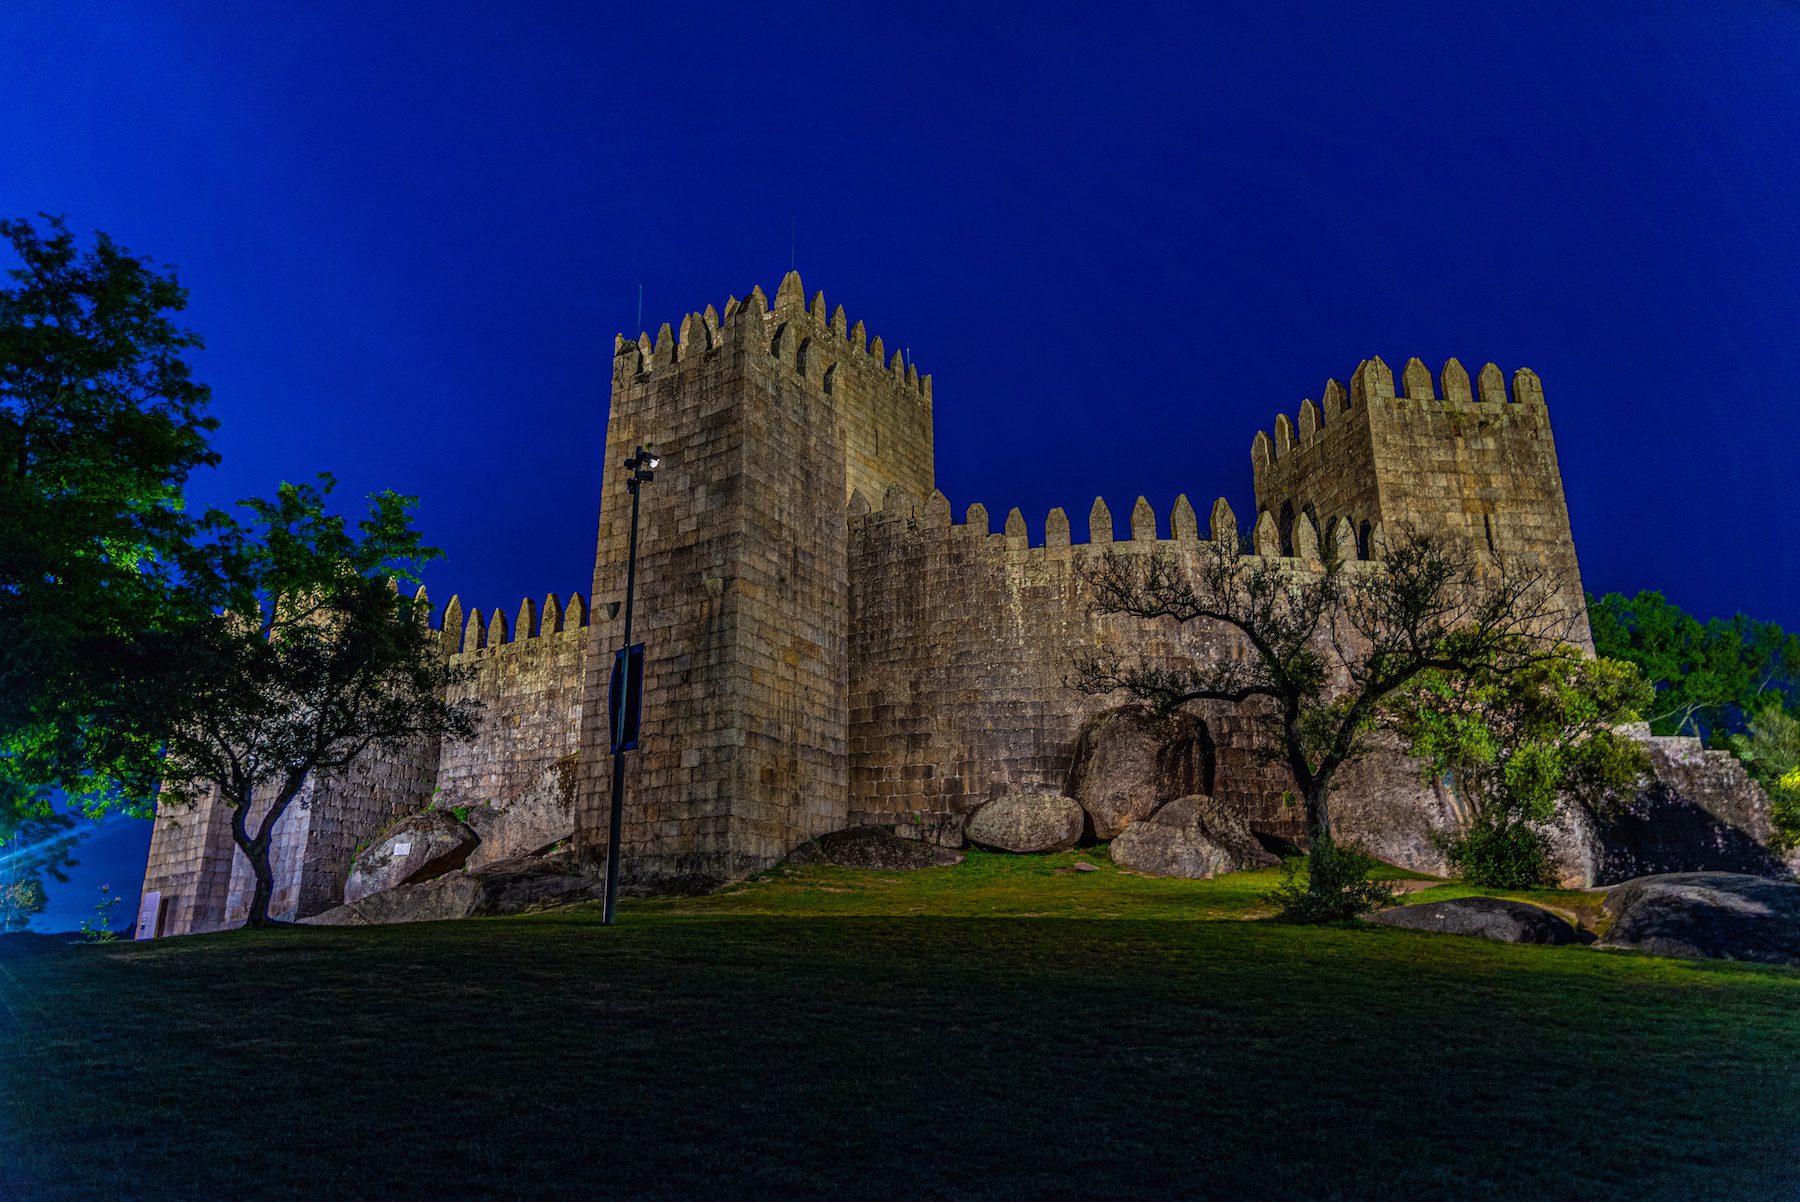 Guimaraes castle in Portugal against a deep blue sky